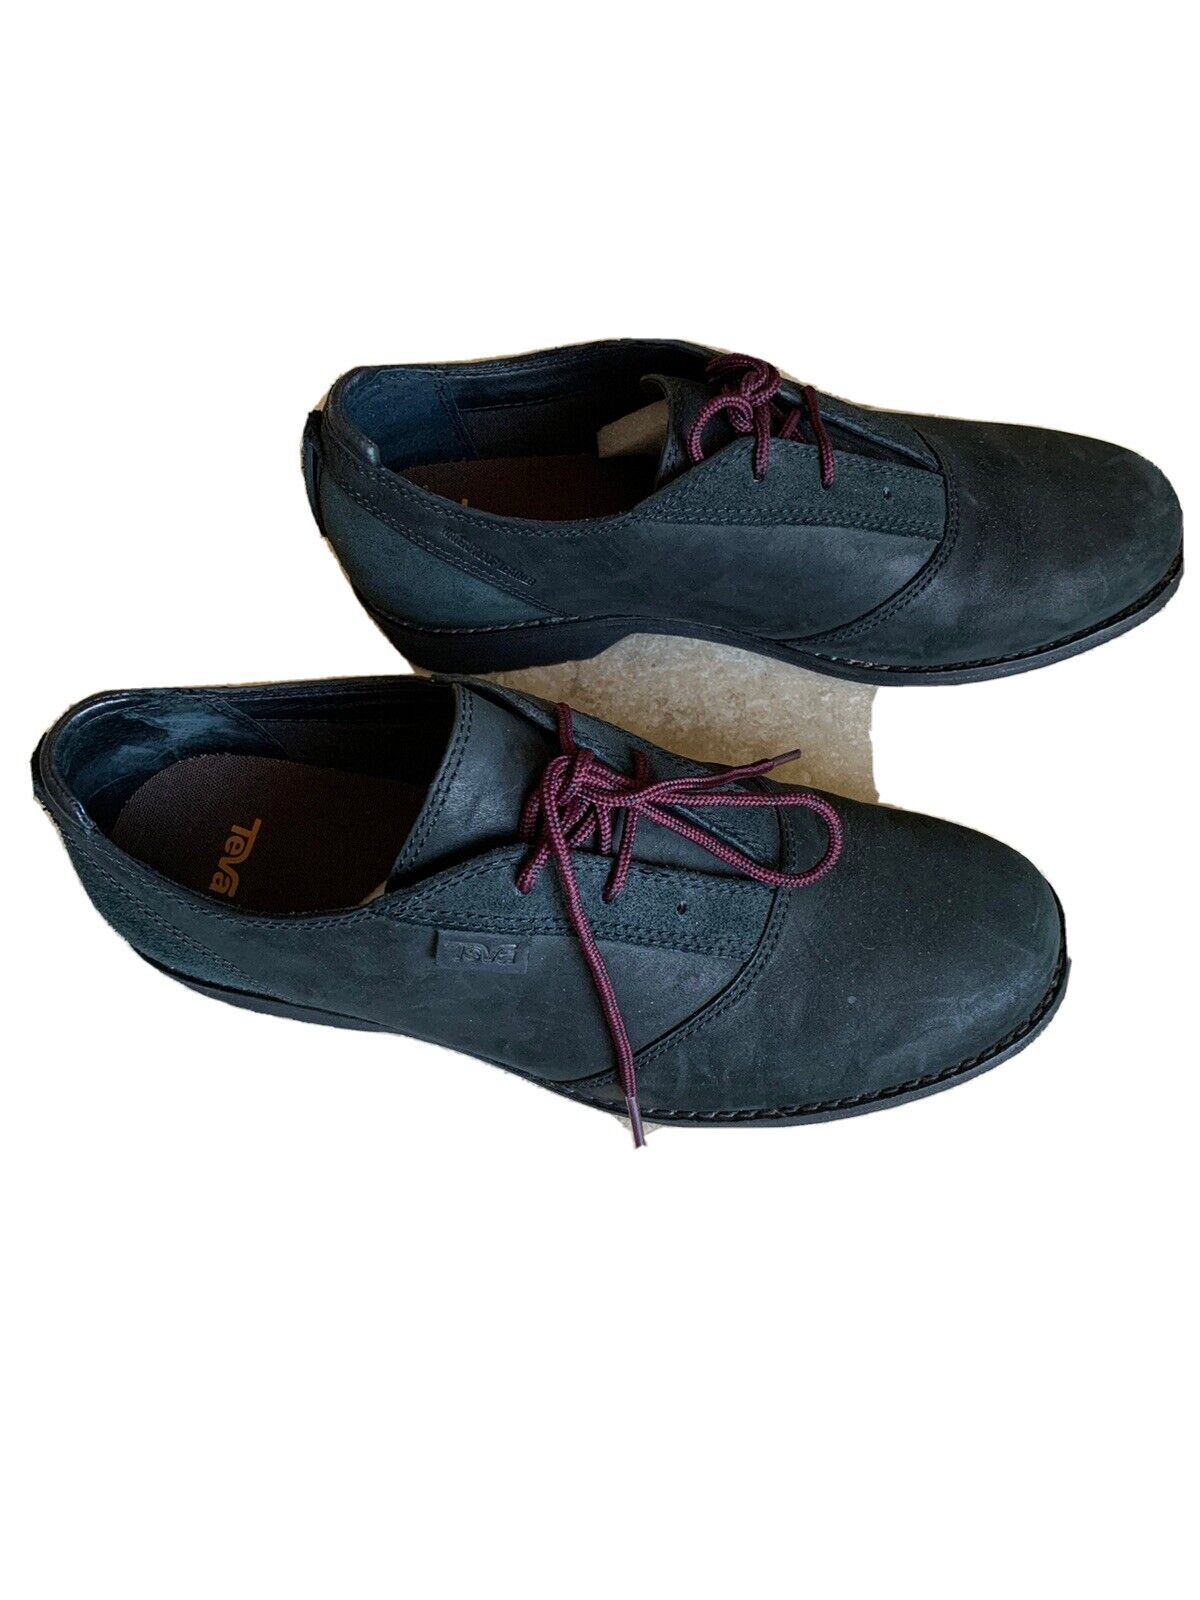 Teva De La Vina Dos Shoes In Black Size 8 - image 1